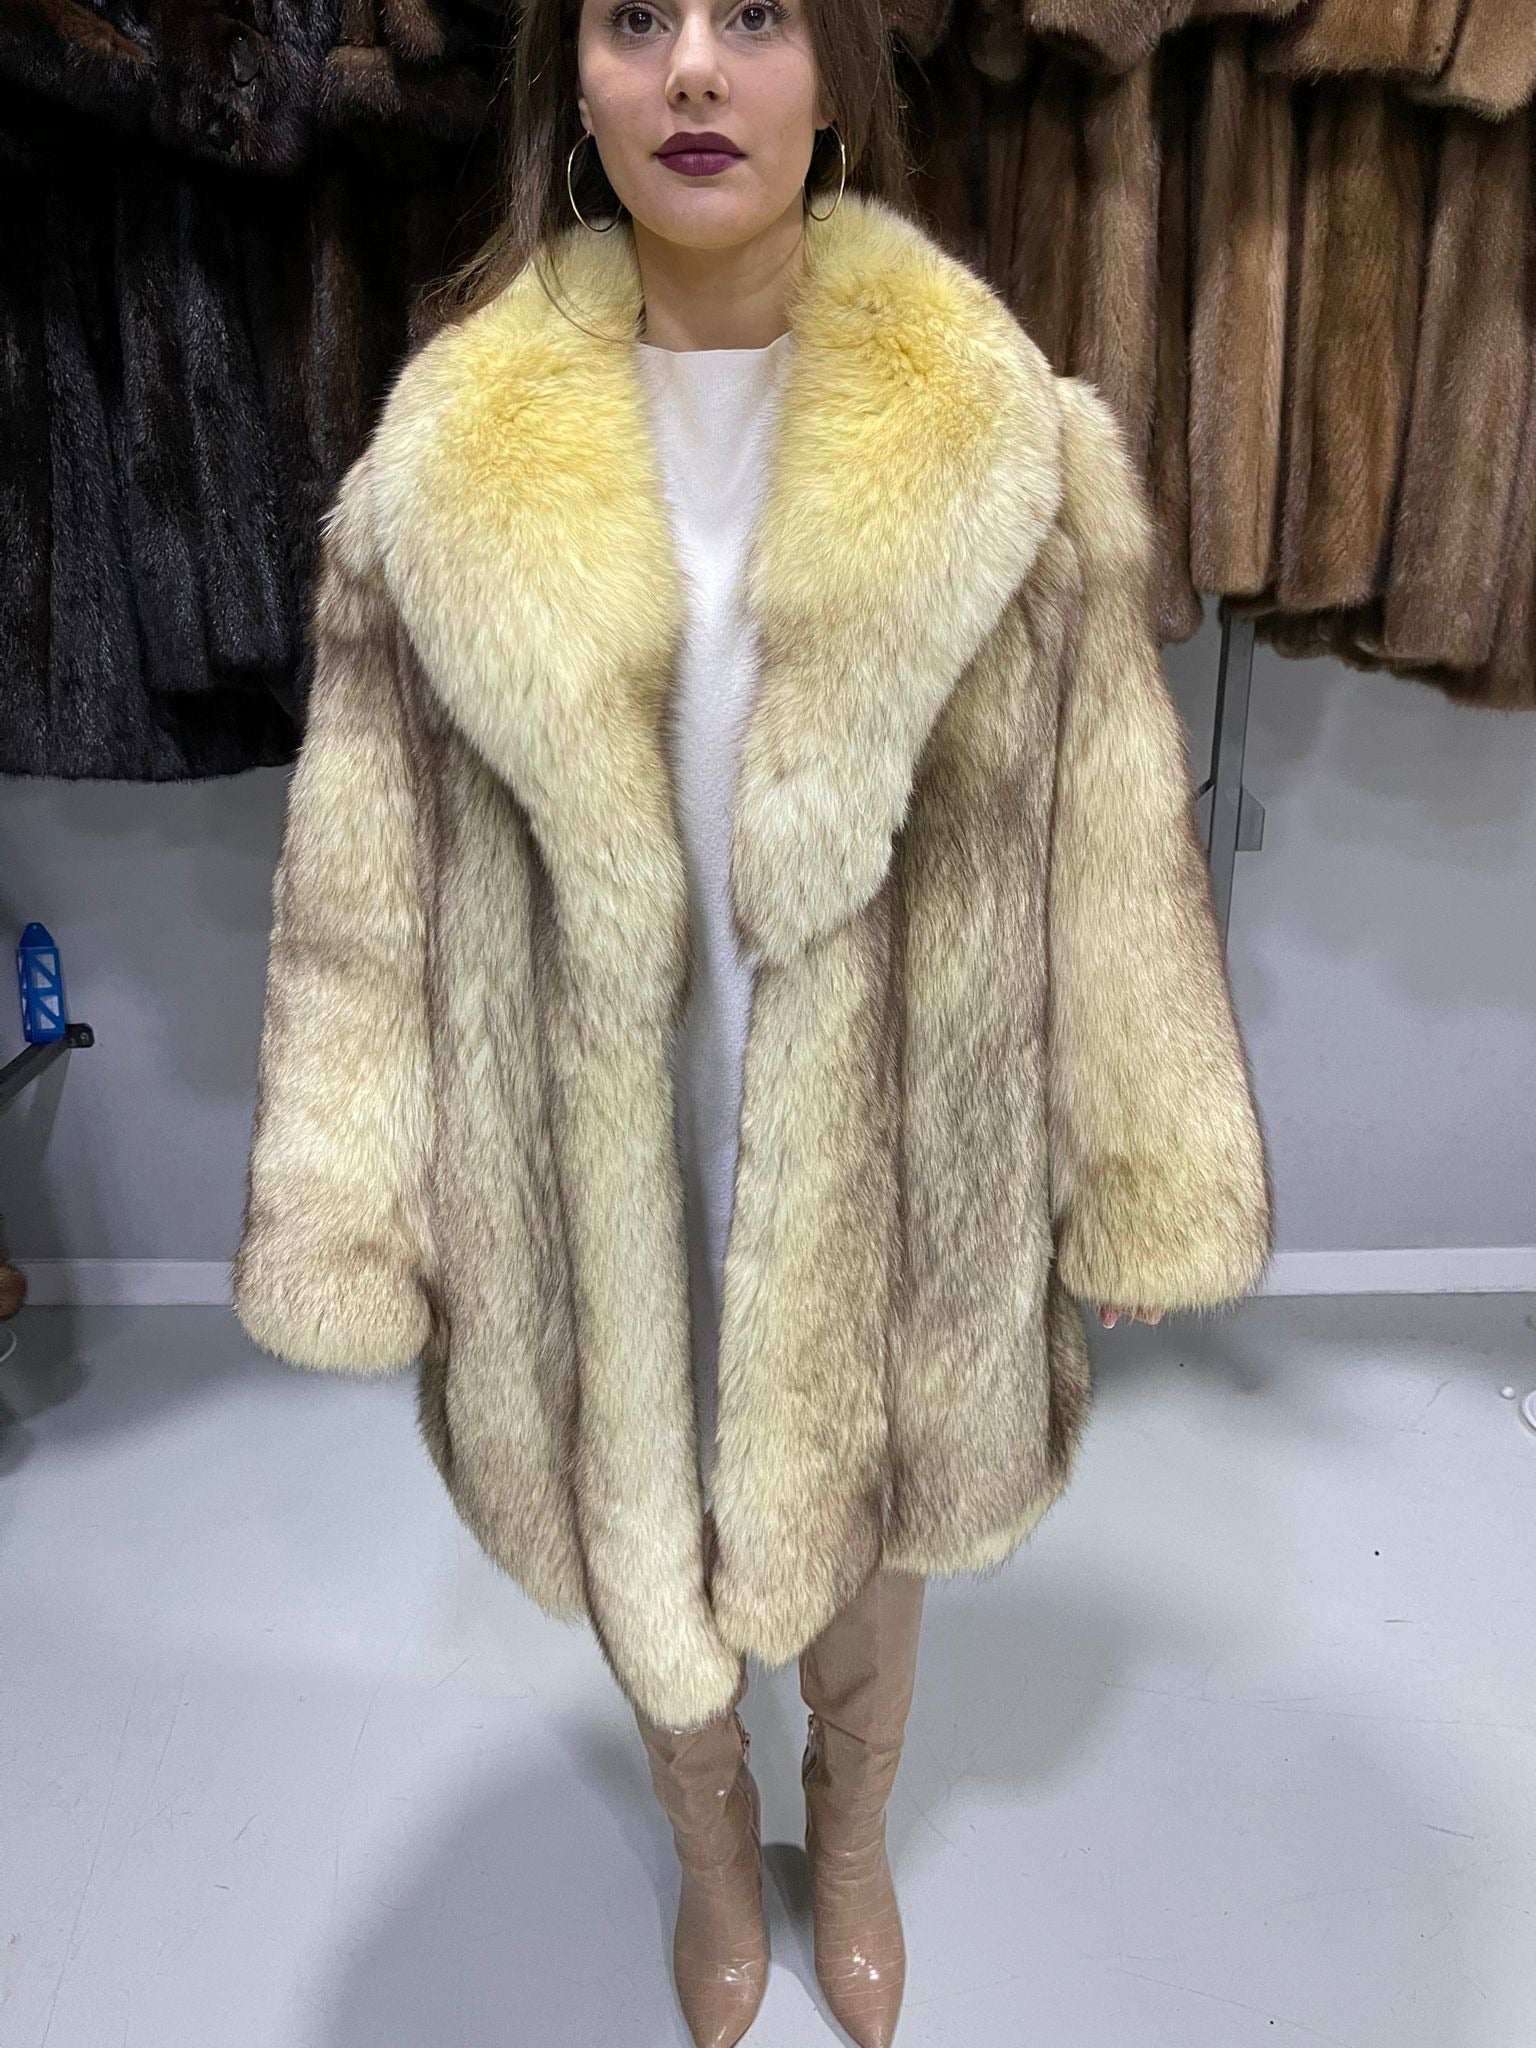 SAGA Royal Vintage Italian Designer Fine Fox Fur Coat - Available - Contact Us To Order